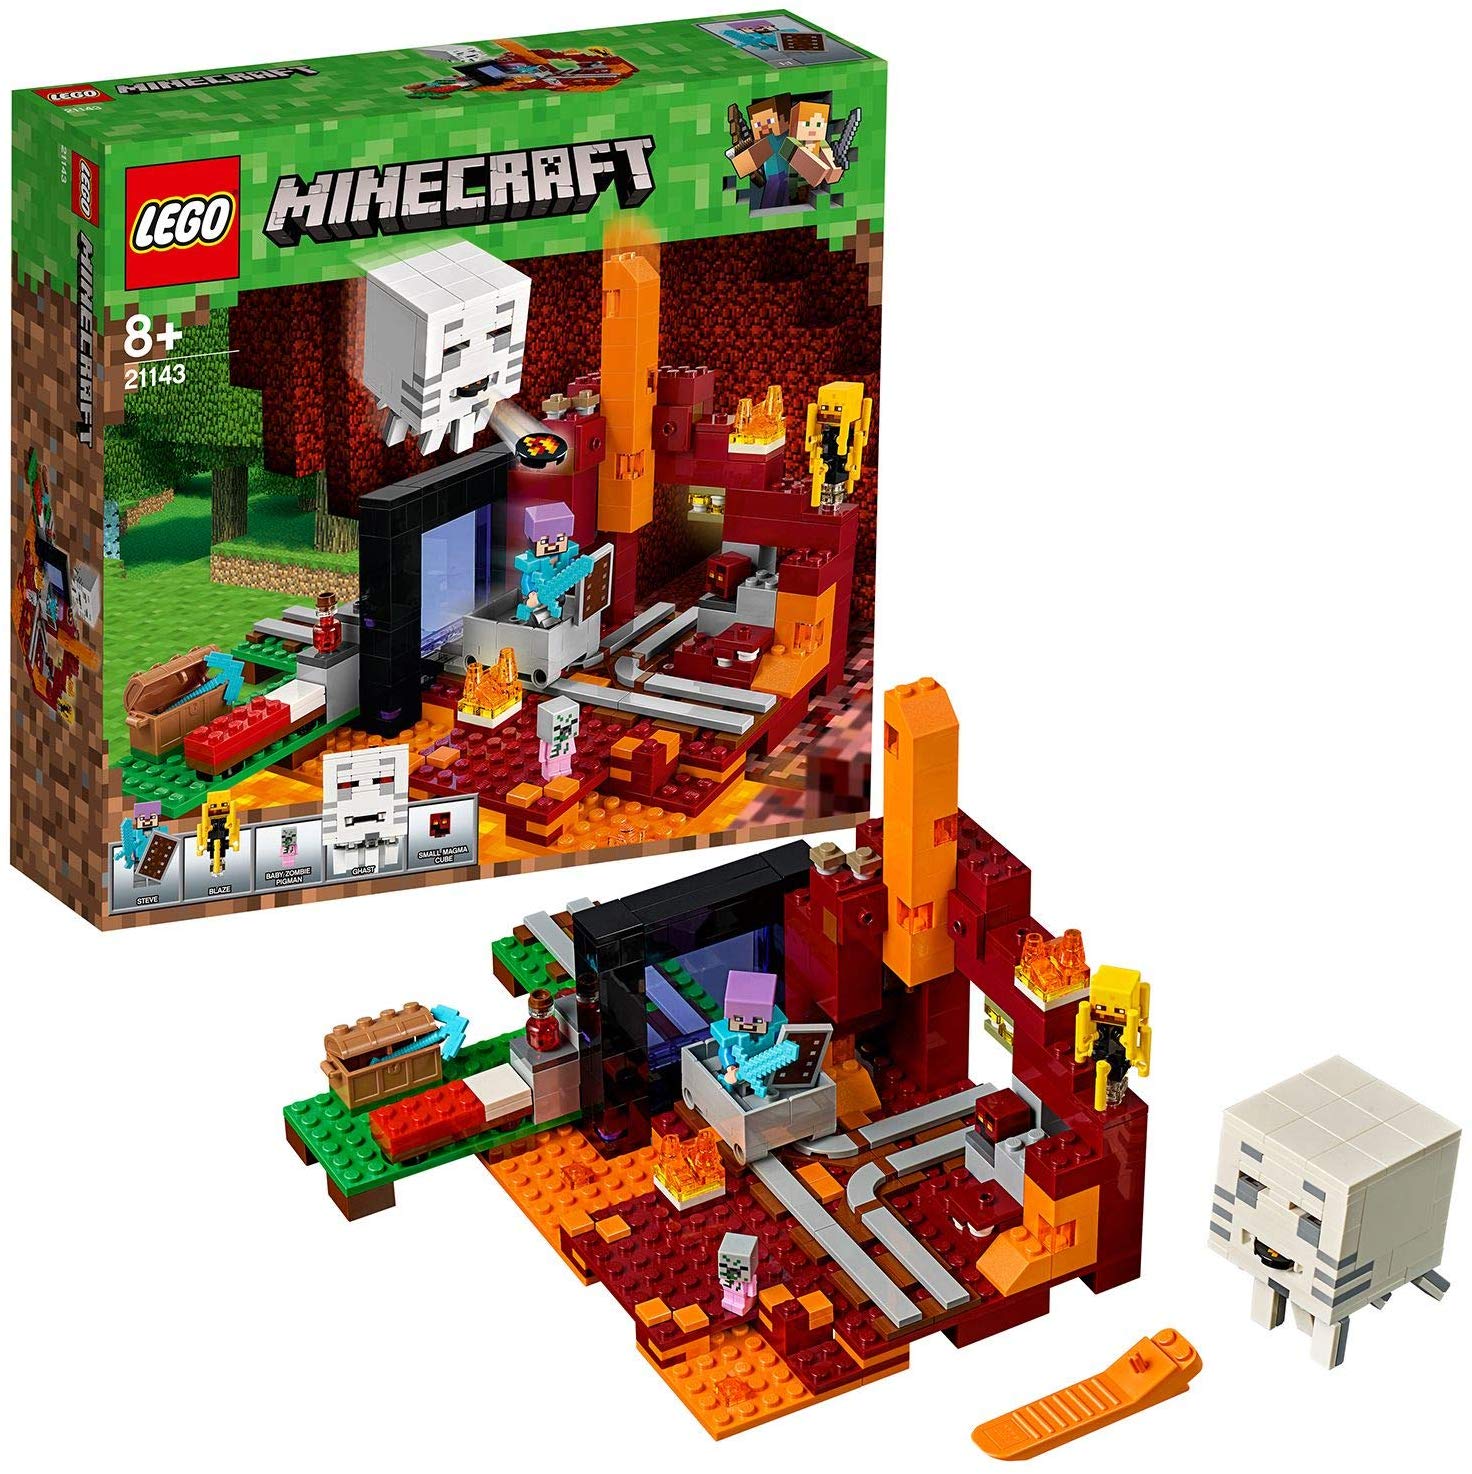 Lego Minecraft 21143 – The Nether Portal, Single